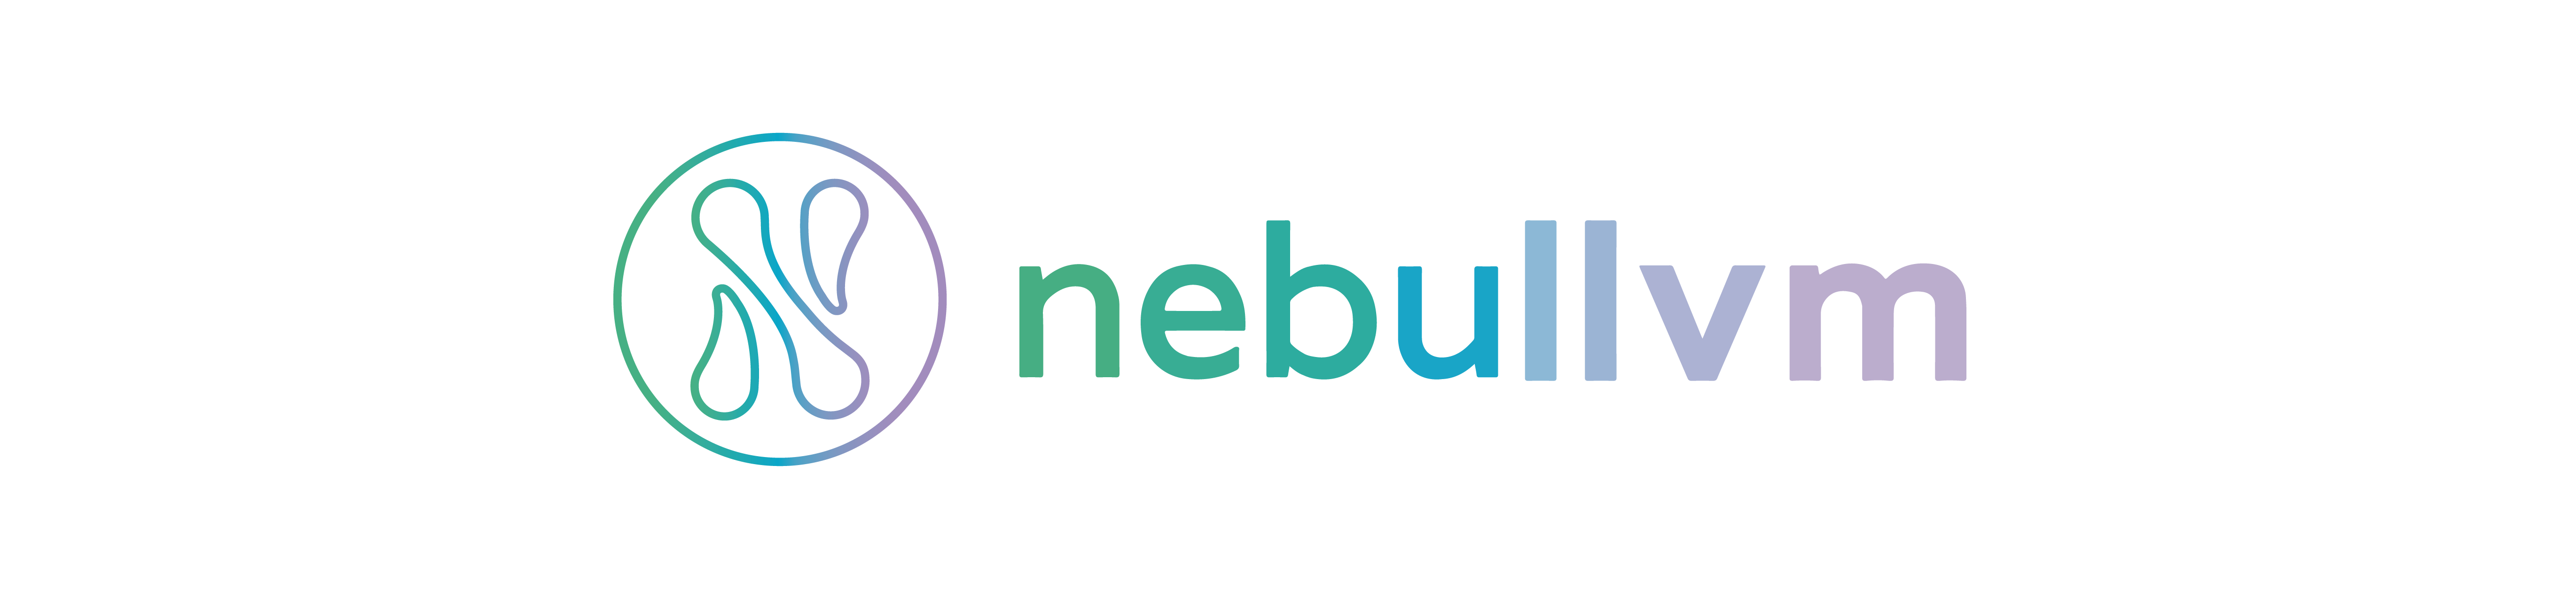 nebullvm nebuly AI accelerate inference optimize DeepLearning